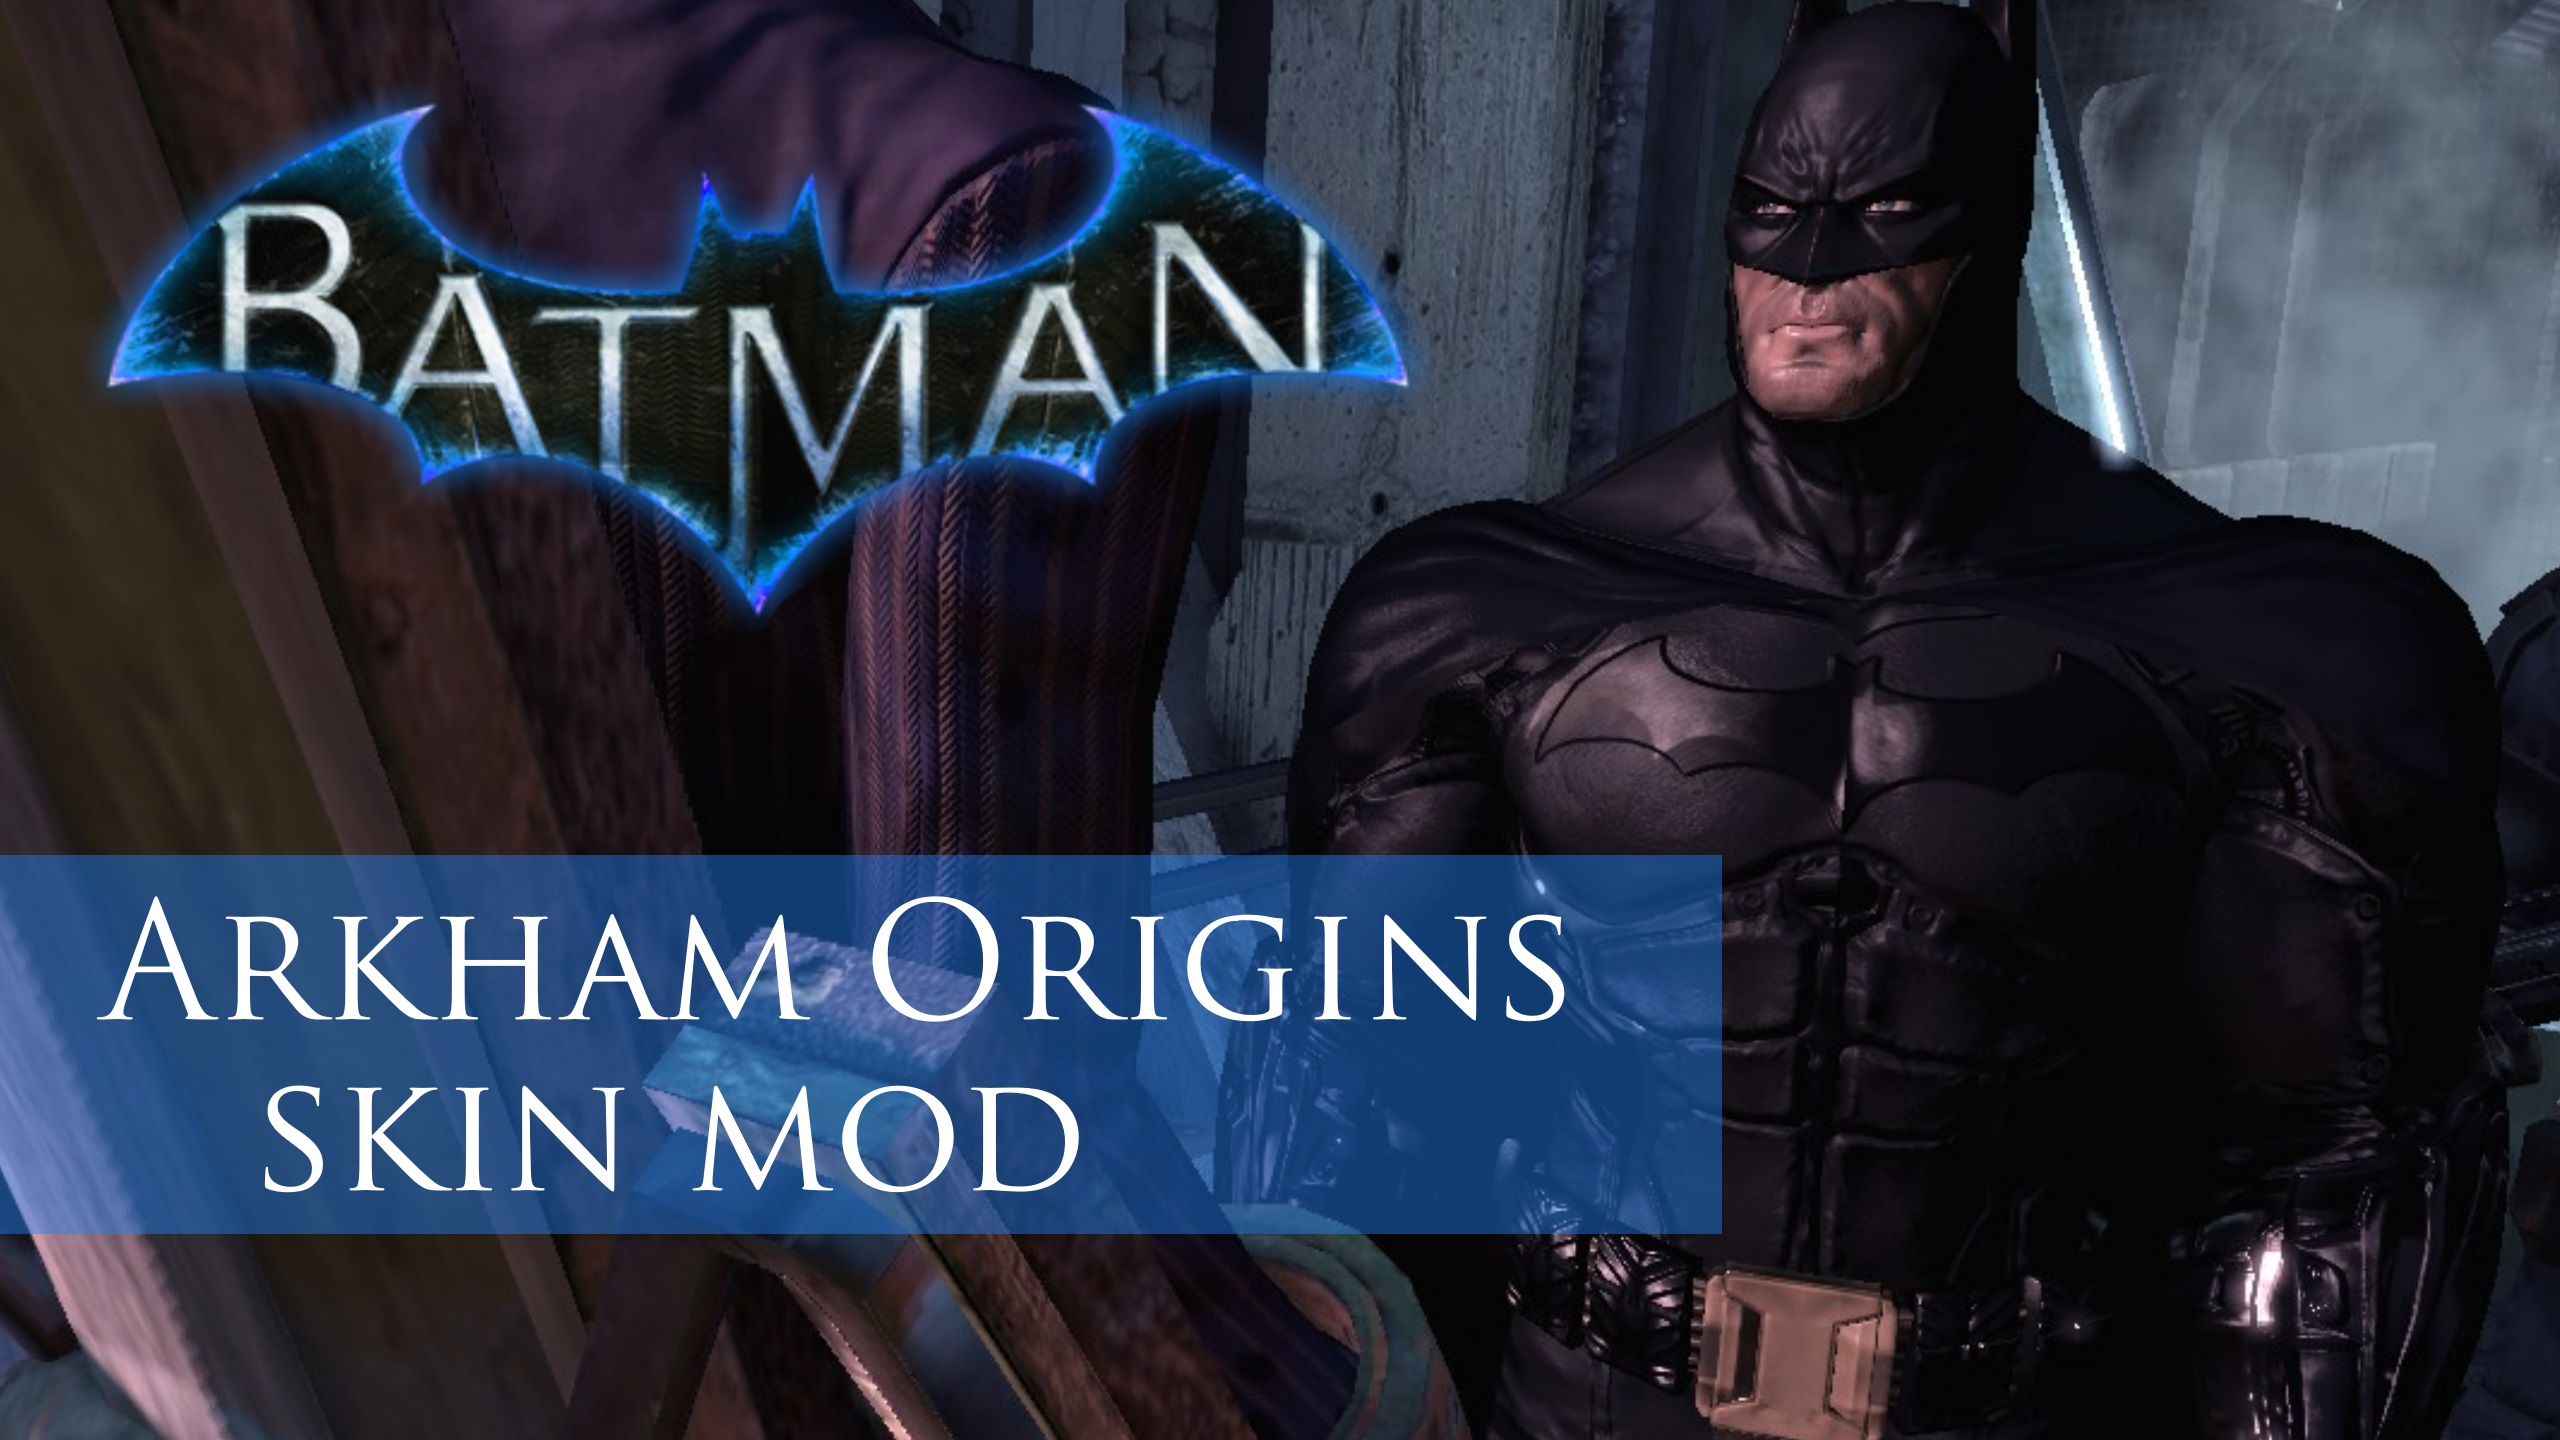 Arkham Origins suit for Arkham Asylum by thebatmanhimself on DeviantArt